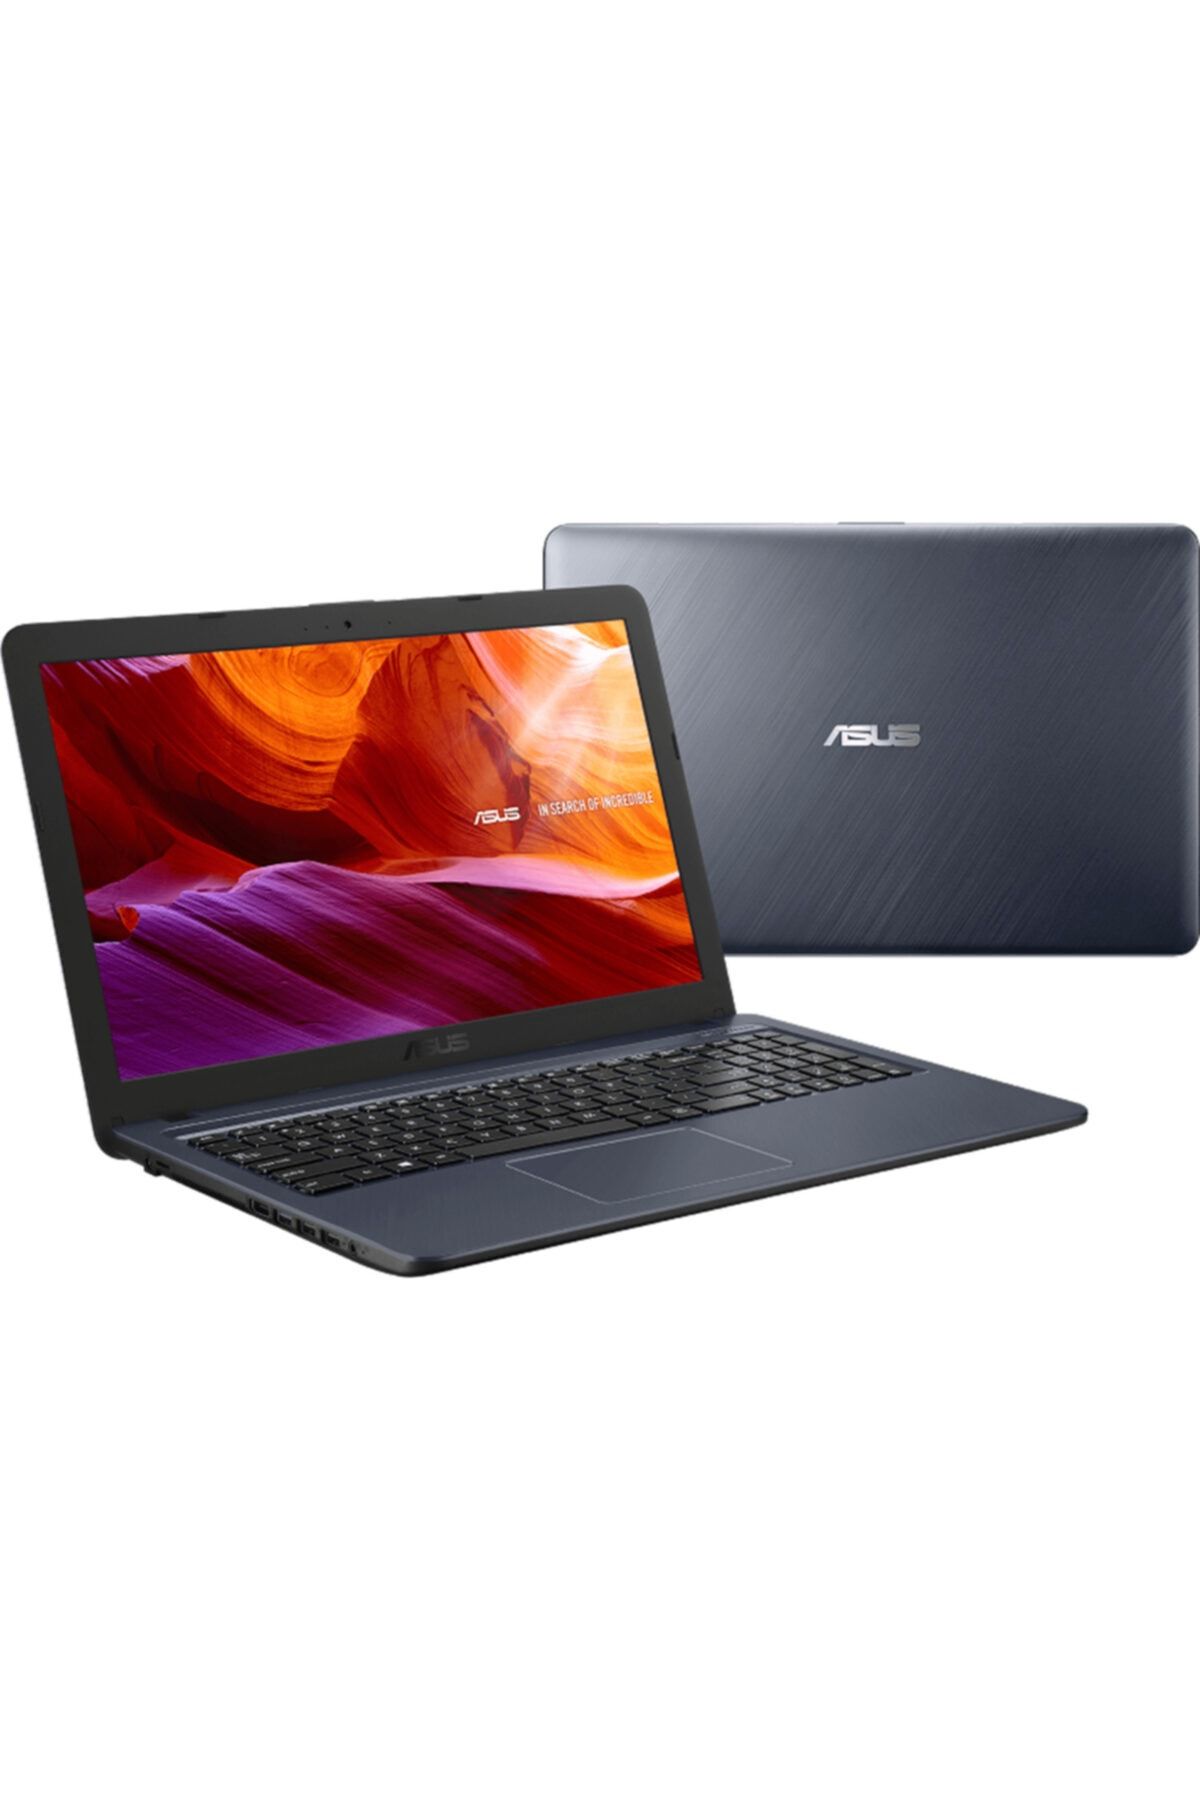 ASUS F543m (GQ1243T) 15.6" Intel Celeron 4 128gb (WİNDOWS 10) Notebook (KOYU GRİ)